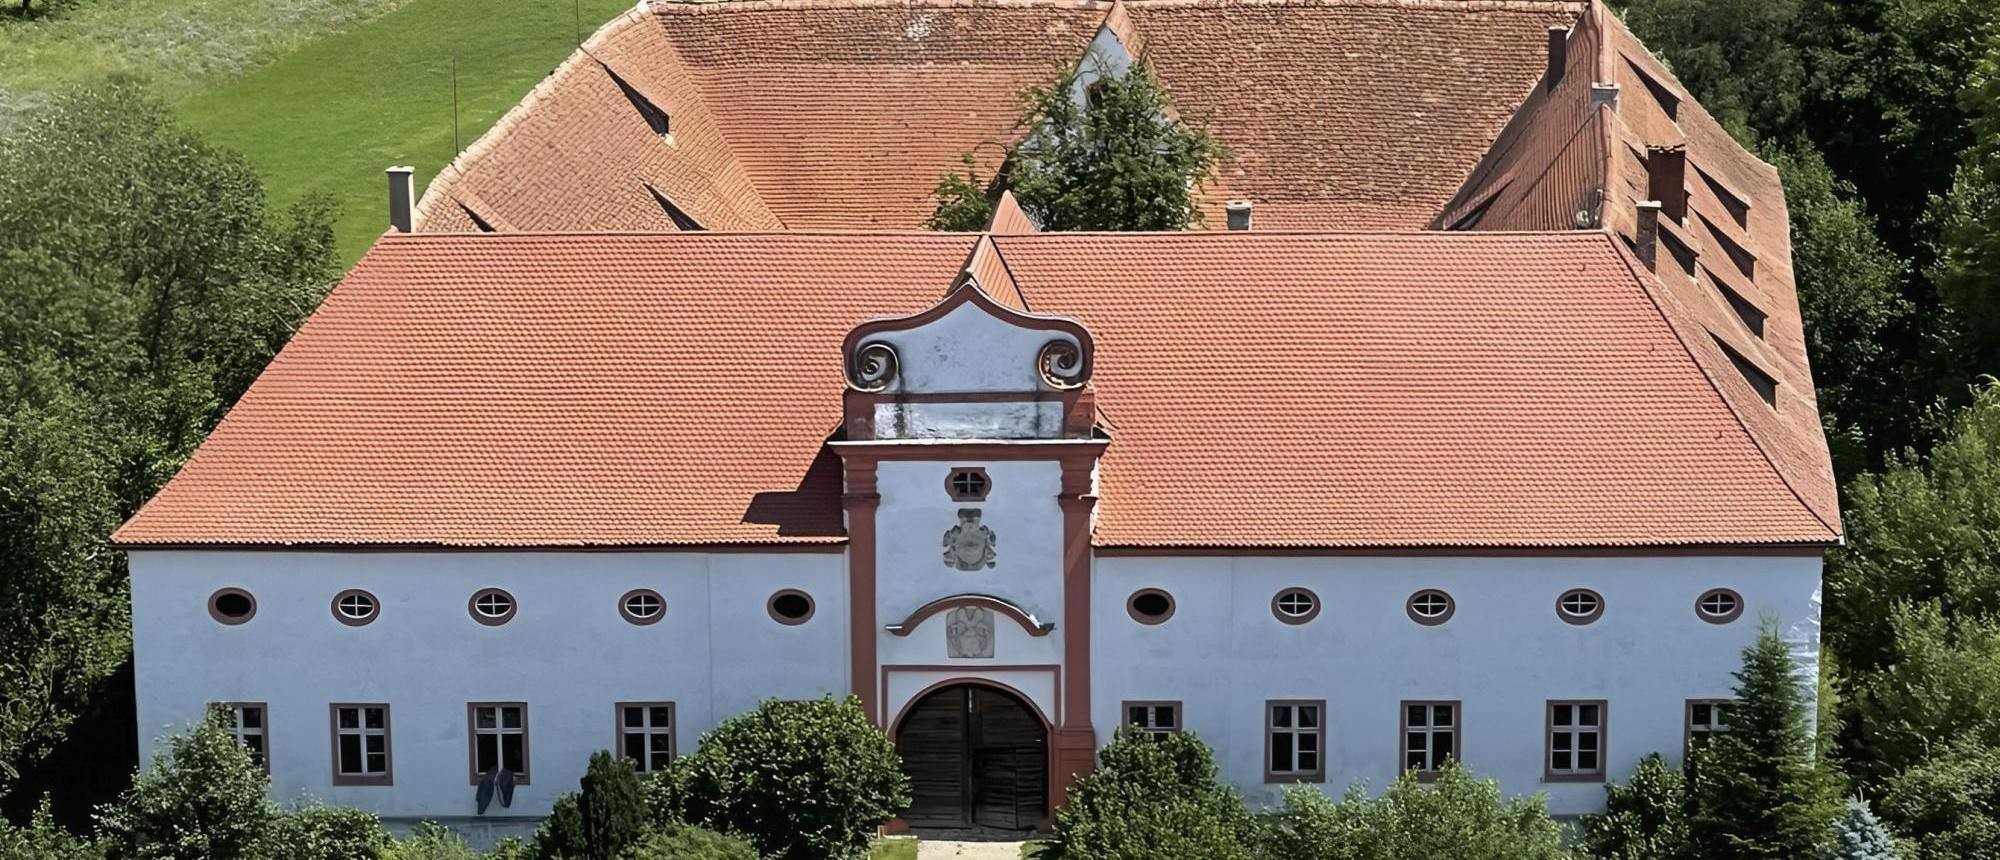 Fotos Barockschloss in Bayern nahe Brombachsee mit Nahwärme beheizt